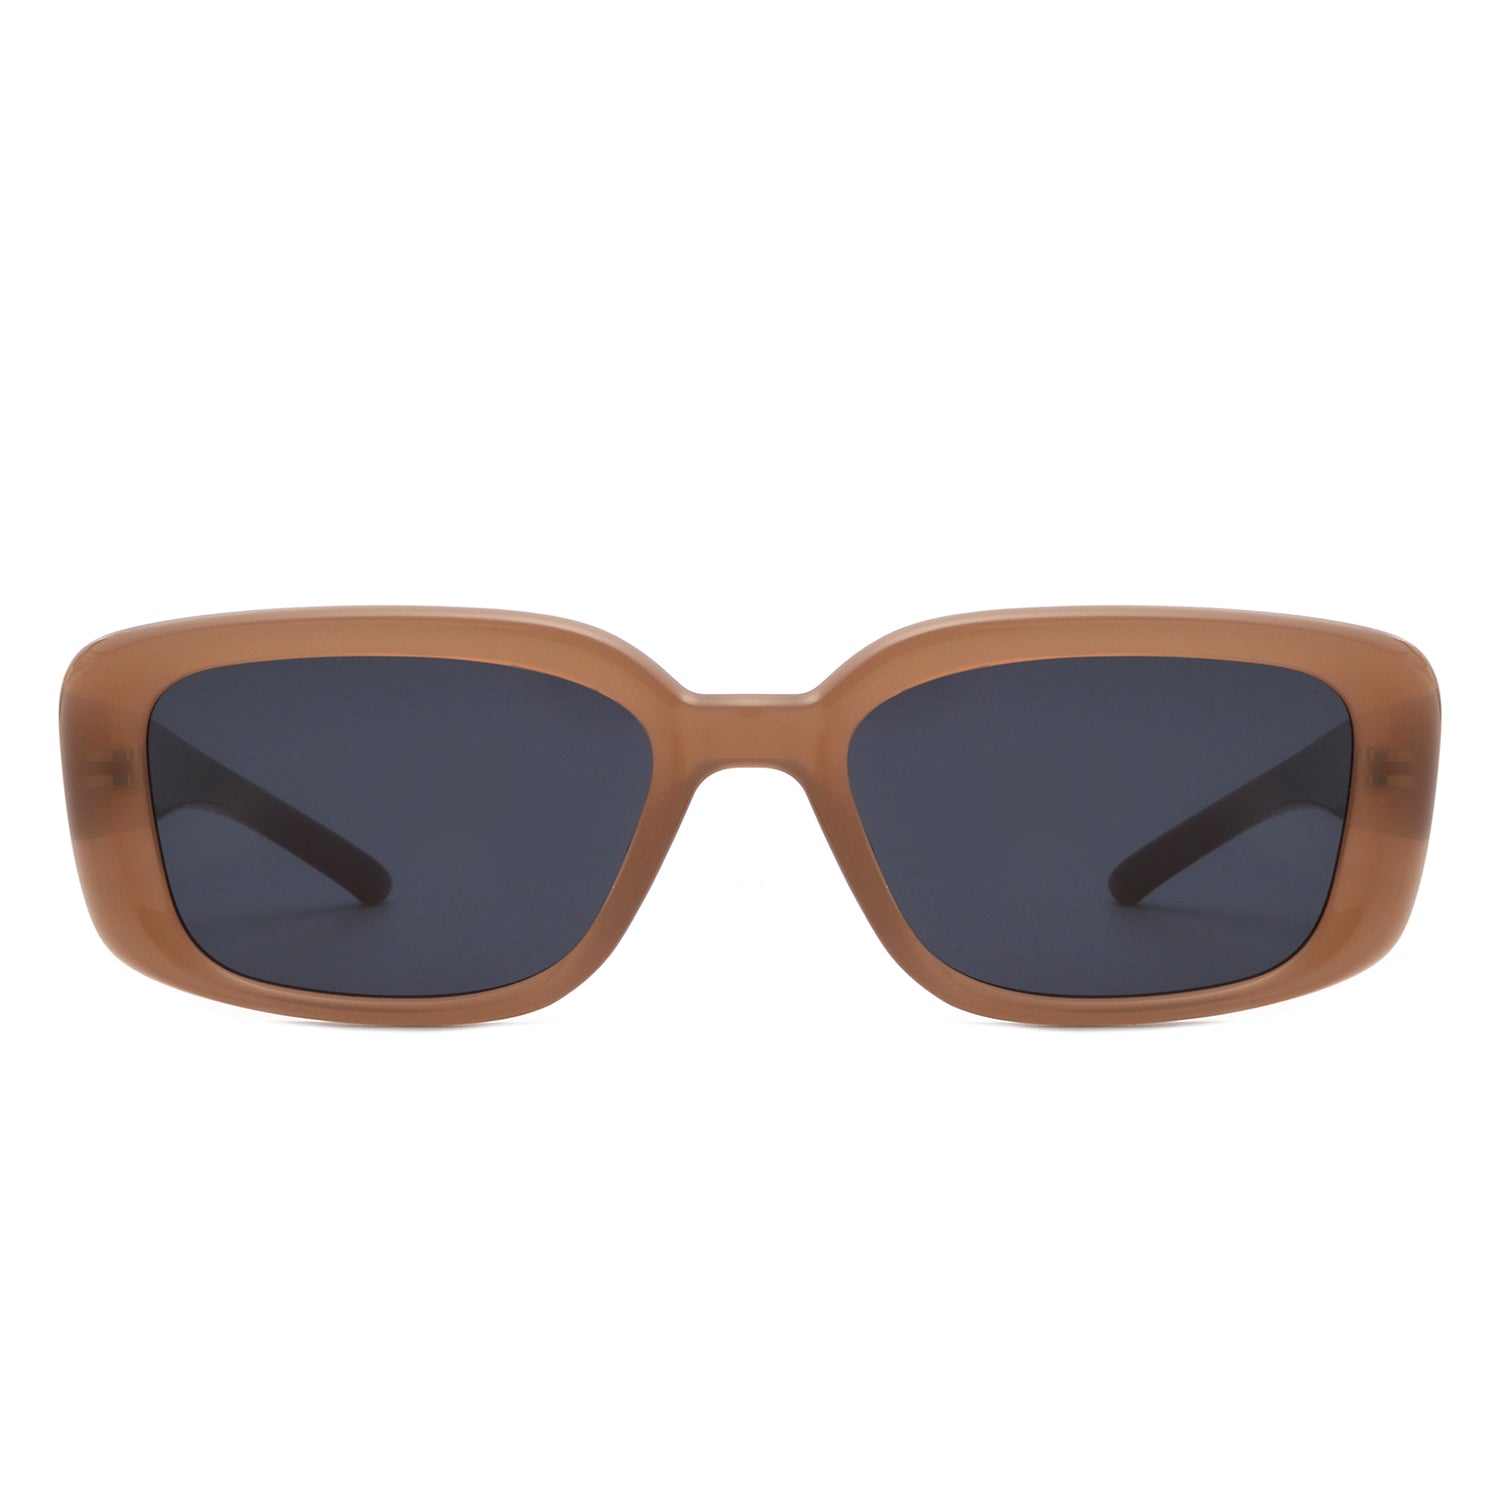 HS1205 - Rectangle Retro Flat Top VINTAGE Inspired Square Wholesale Sunglasses